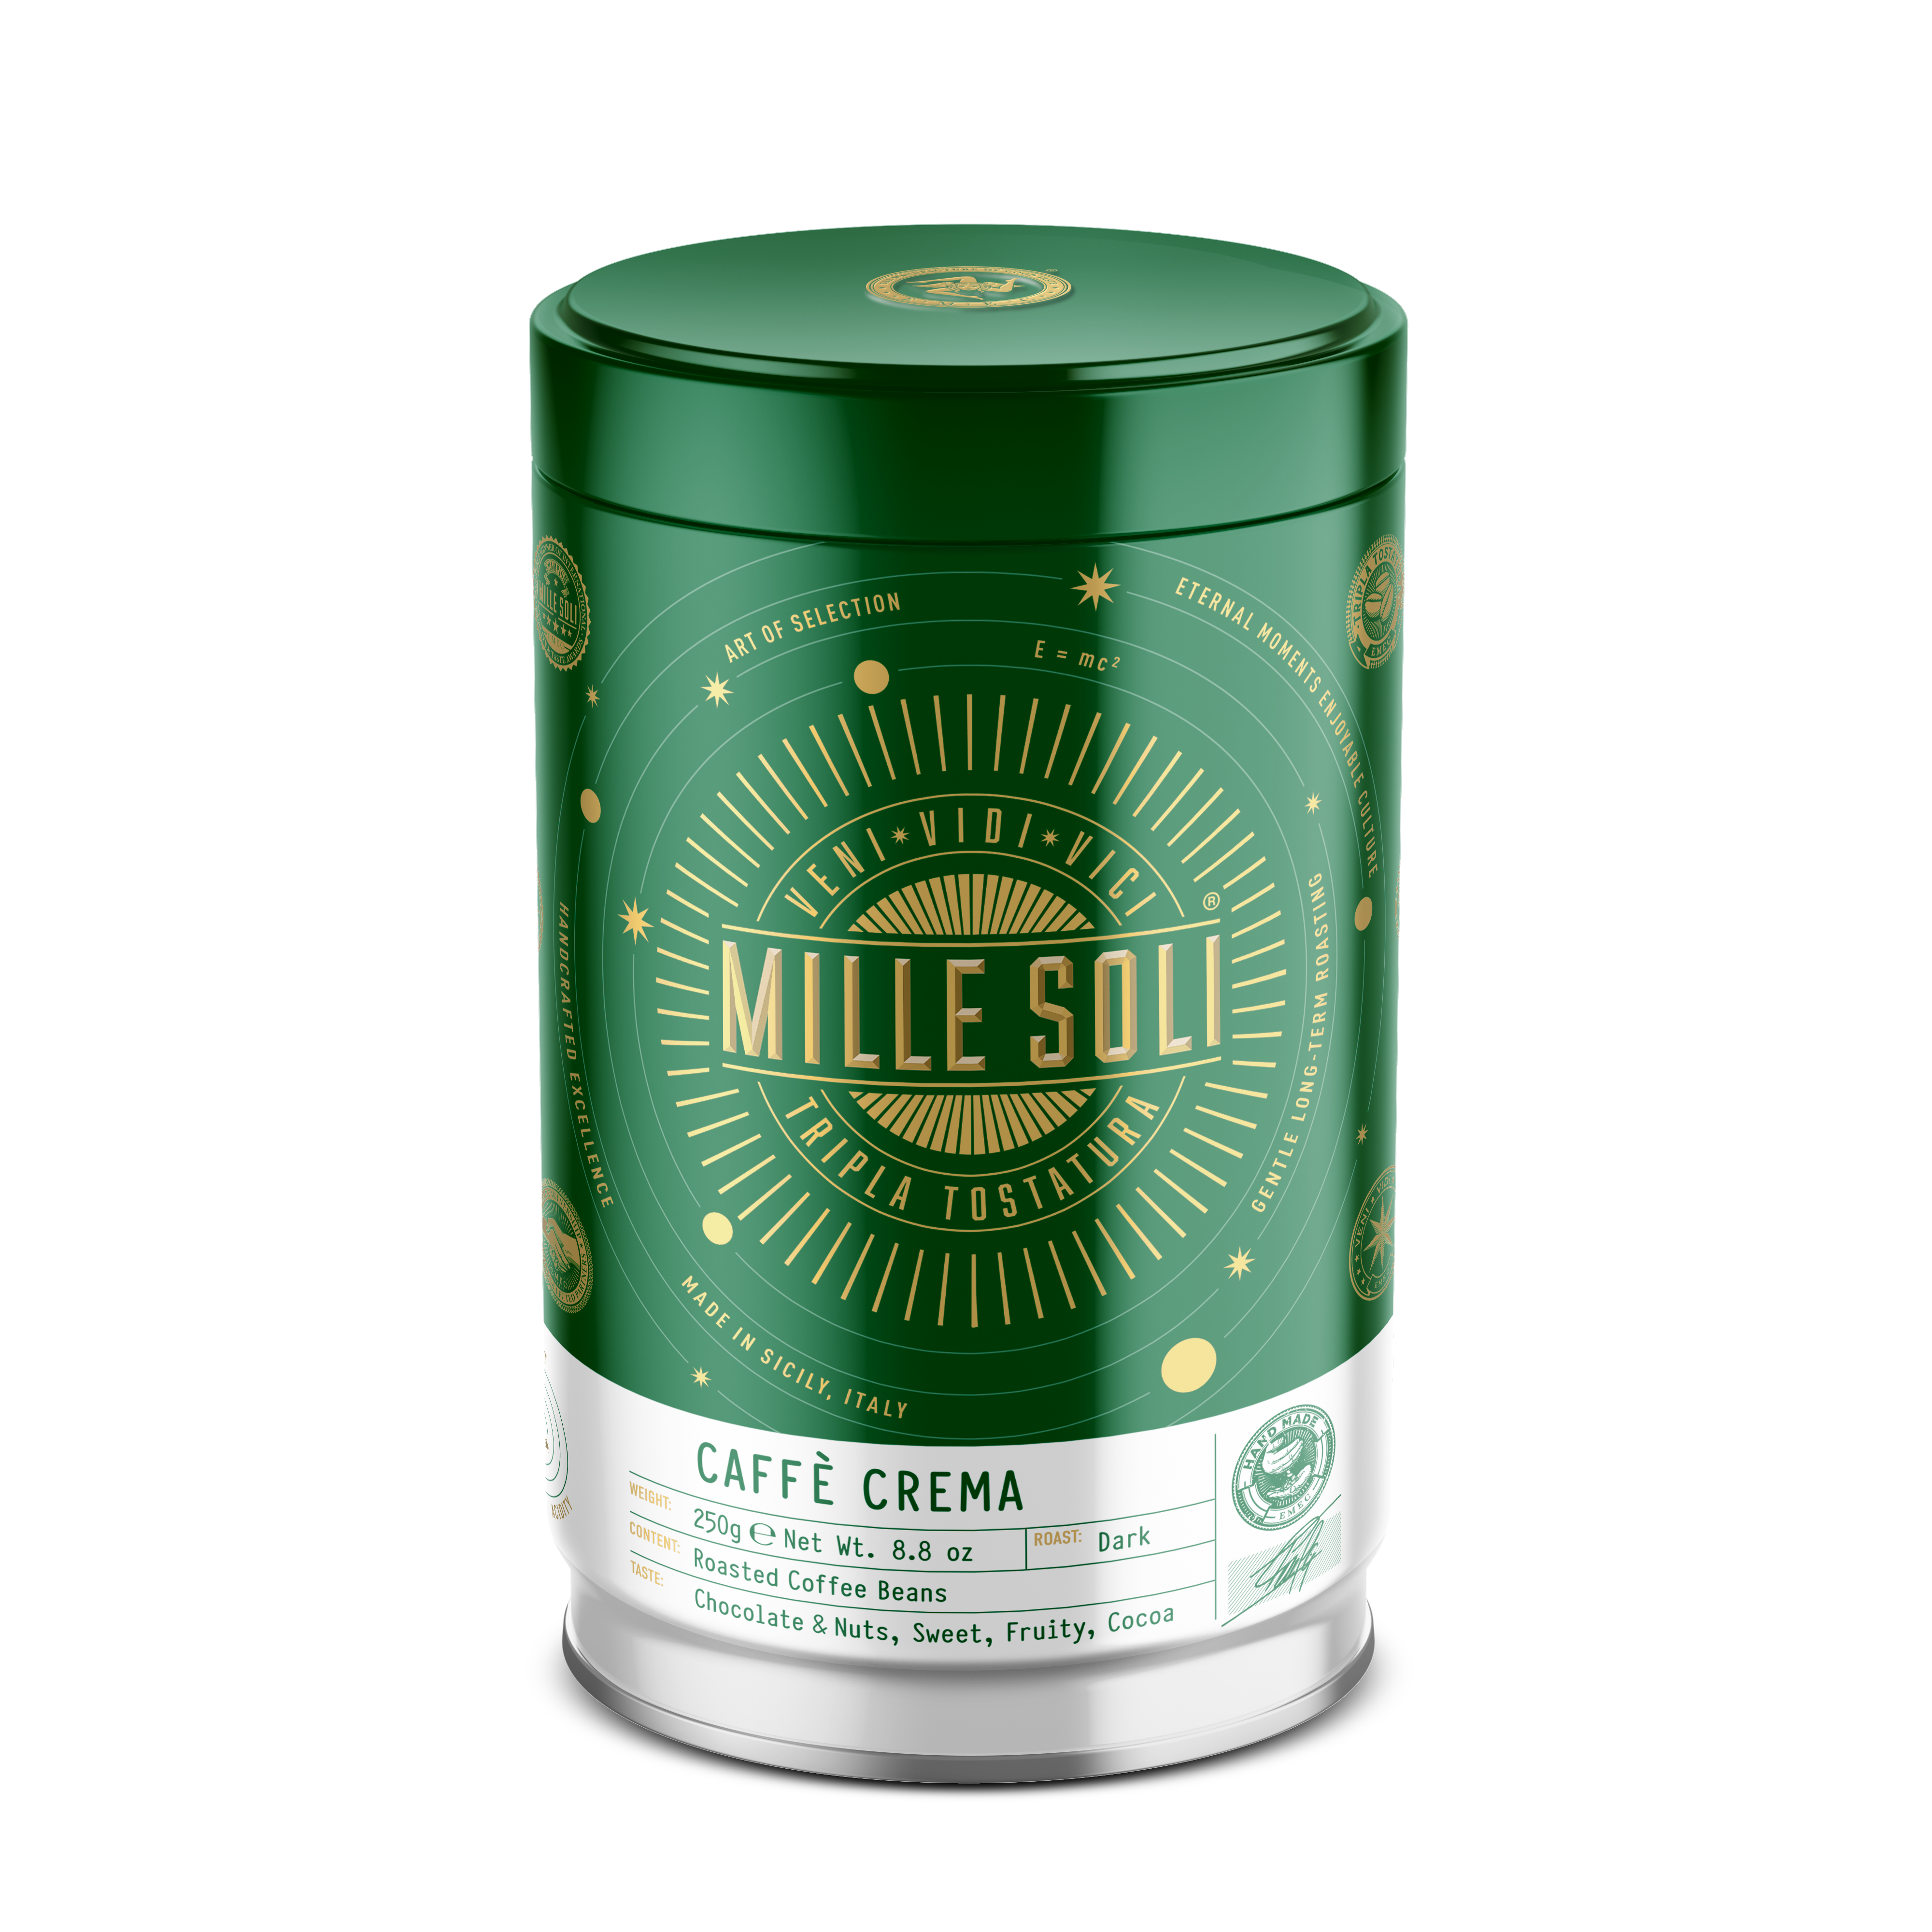 MILLE SOLI - Caffè Crema - 250g - Beans